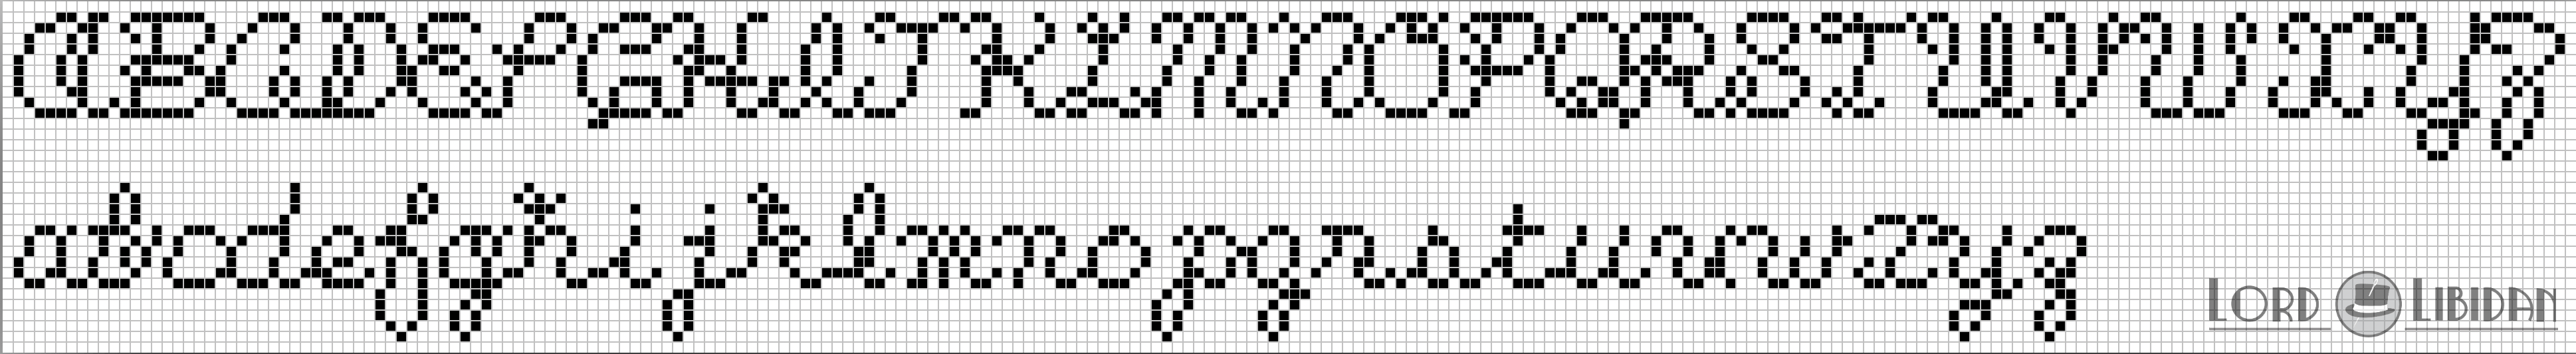 Lower Case Cursive Cross Stitch Alphabet Pattern Free Download by Lord Libidan